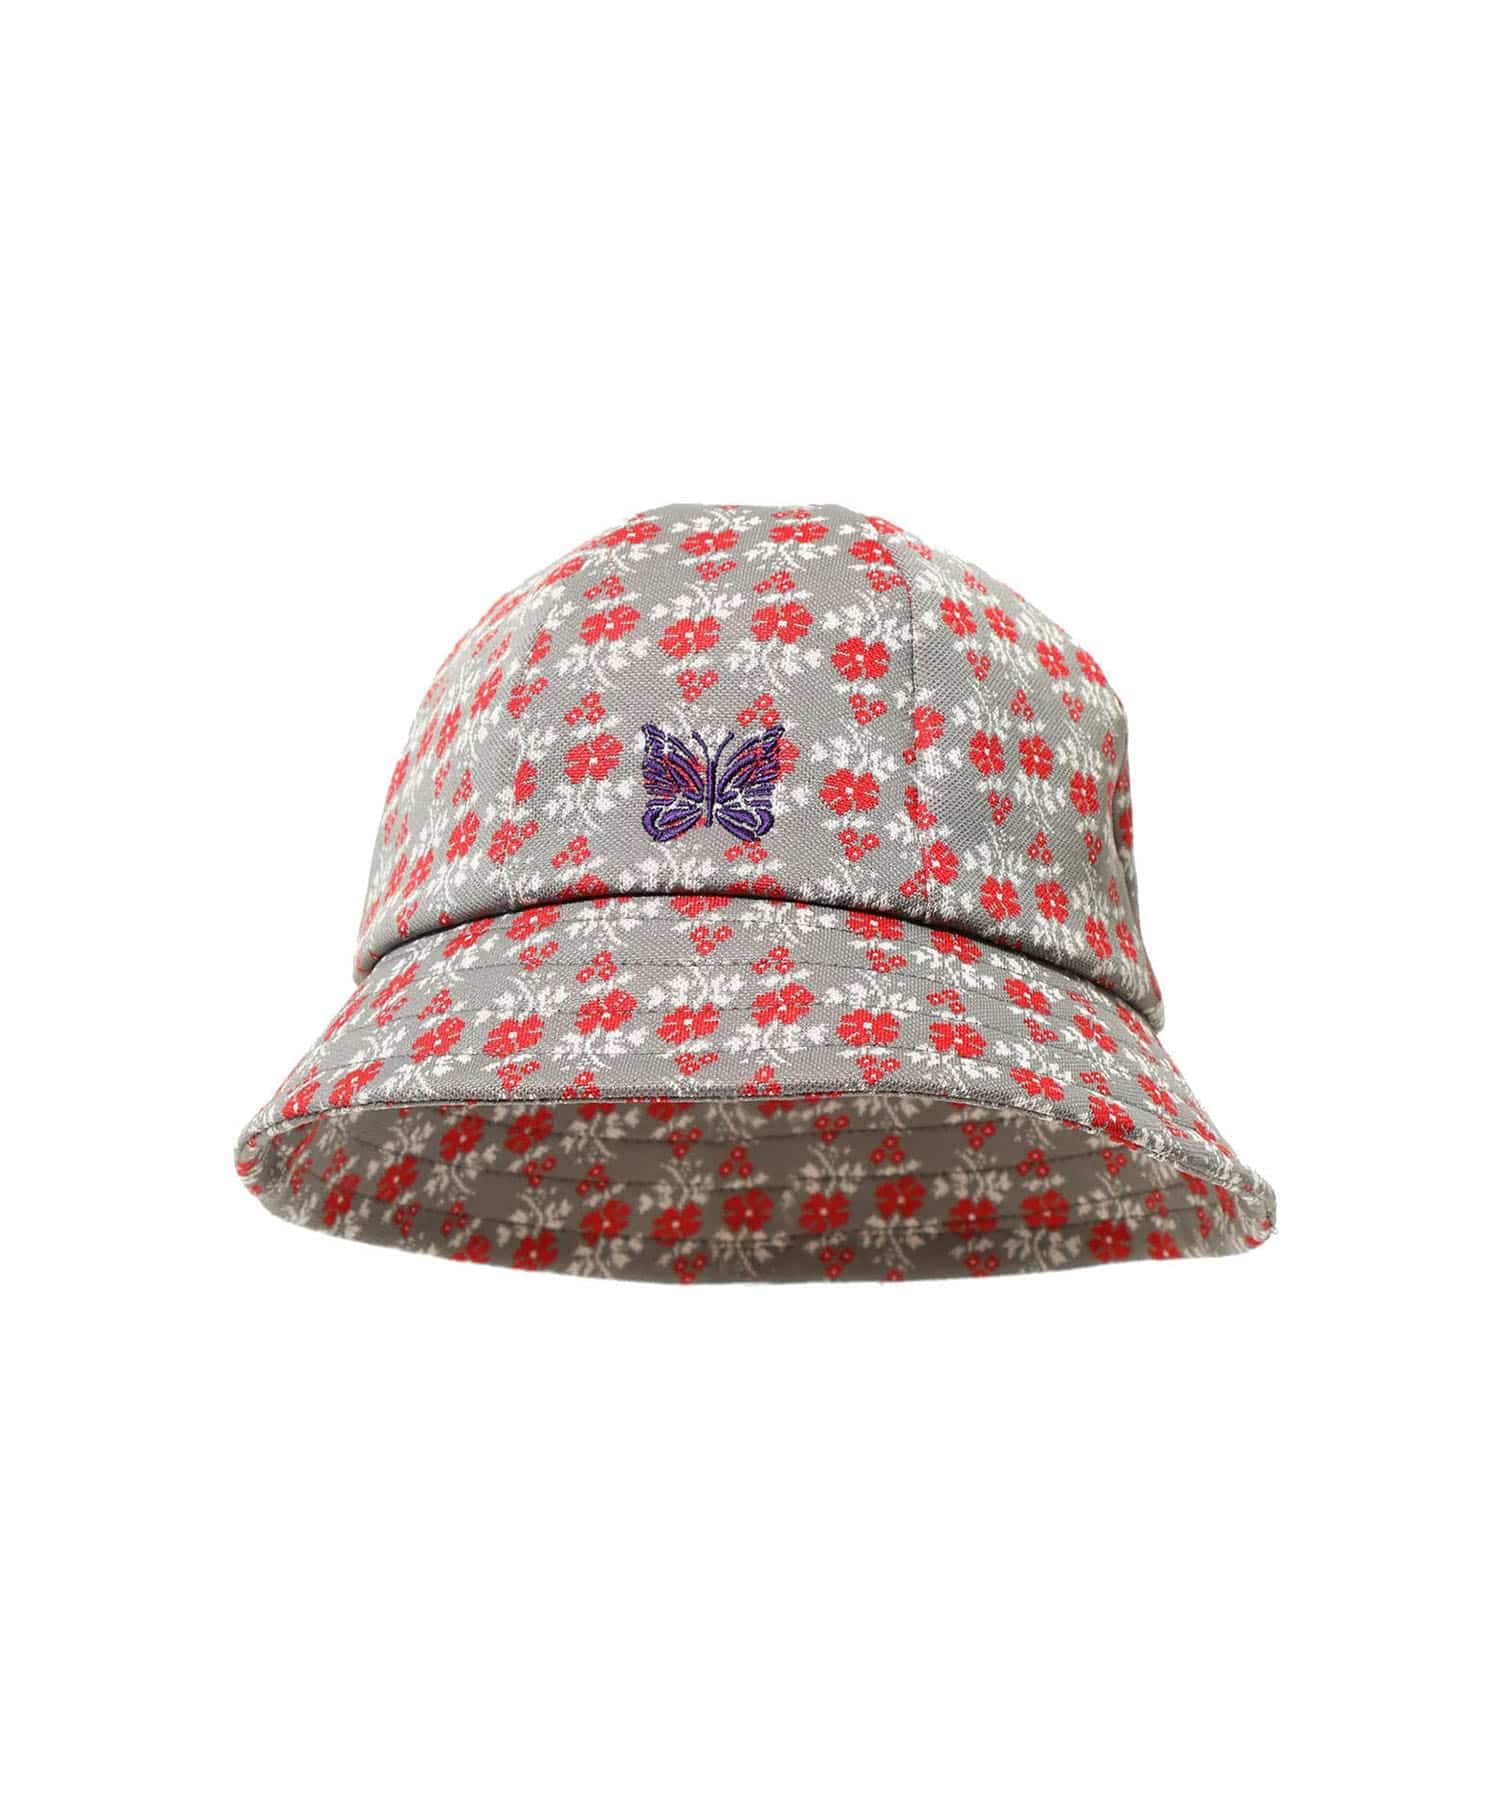 Bermuda Hat - Poly Jq